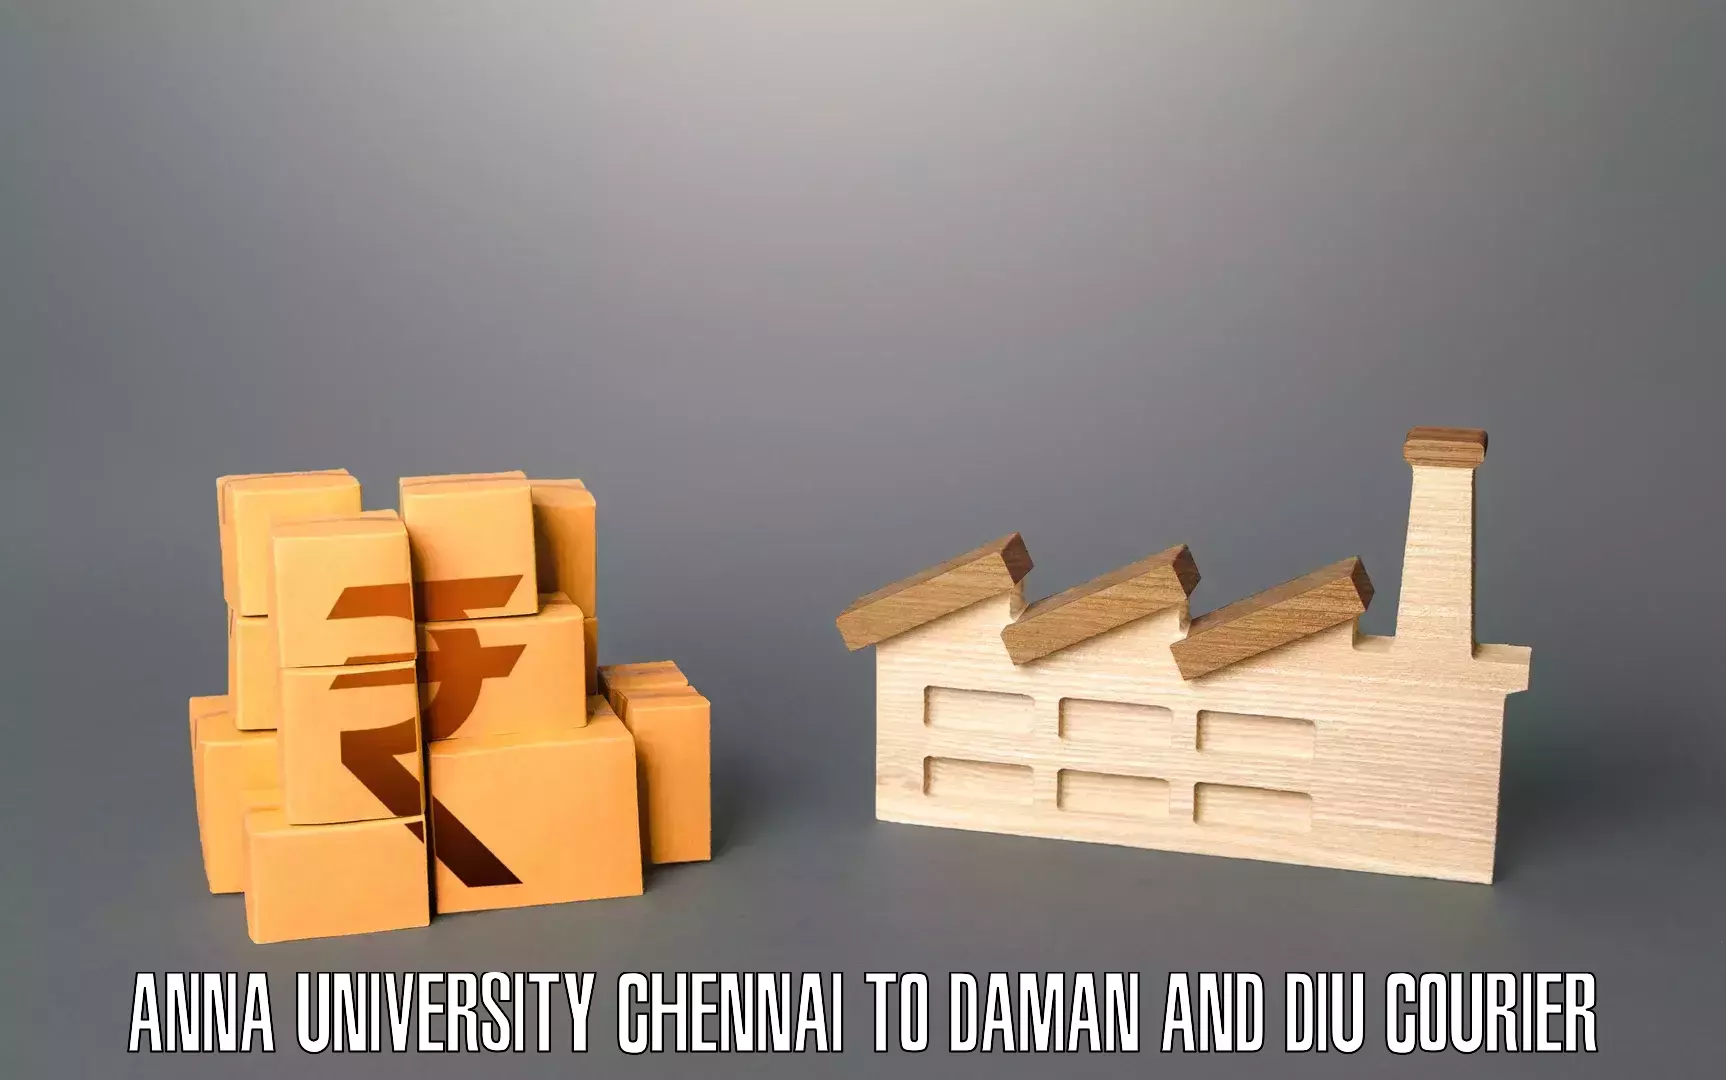 Specialized moving company Anna University Chennai to Daman